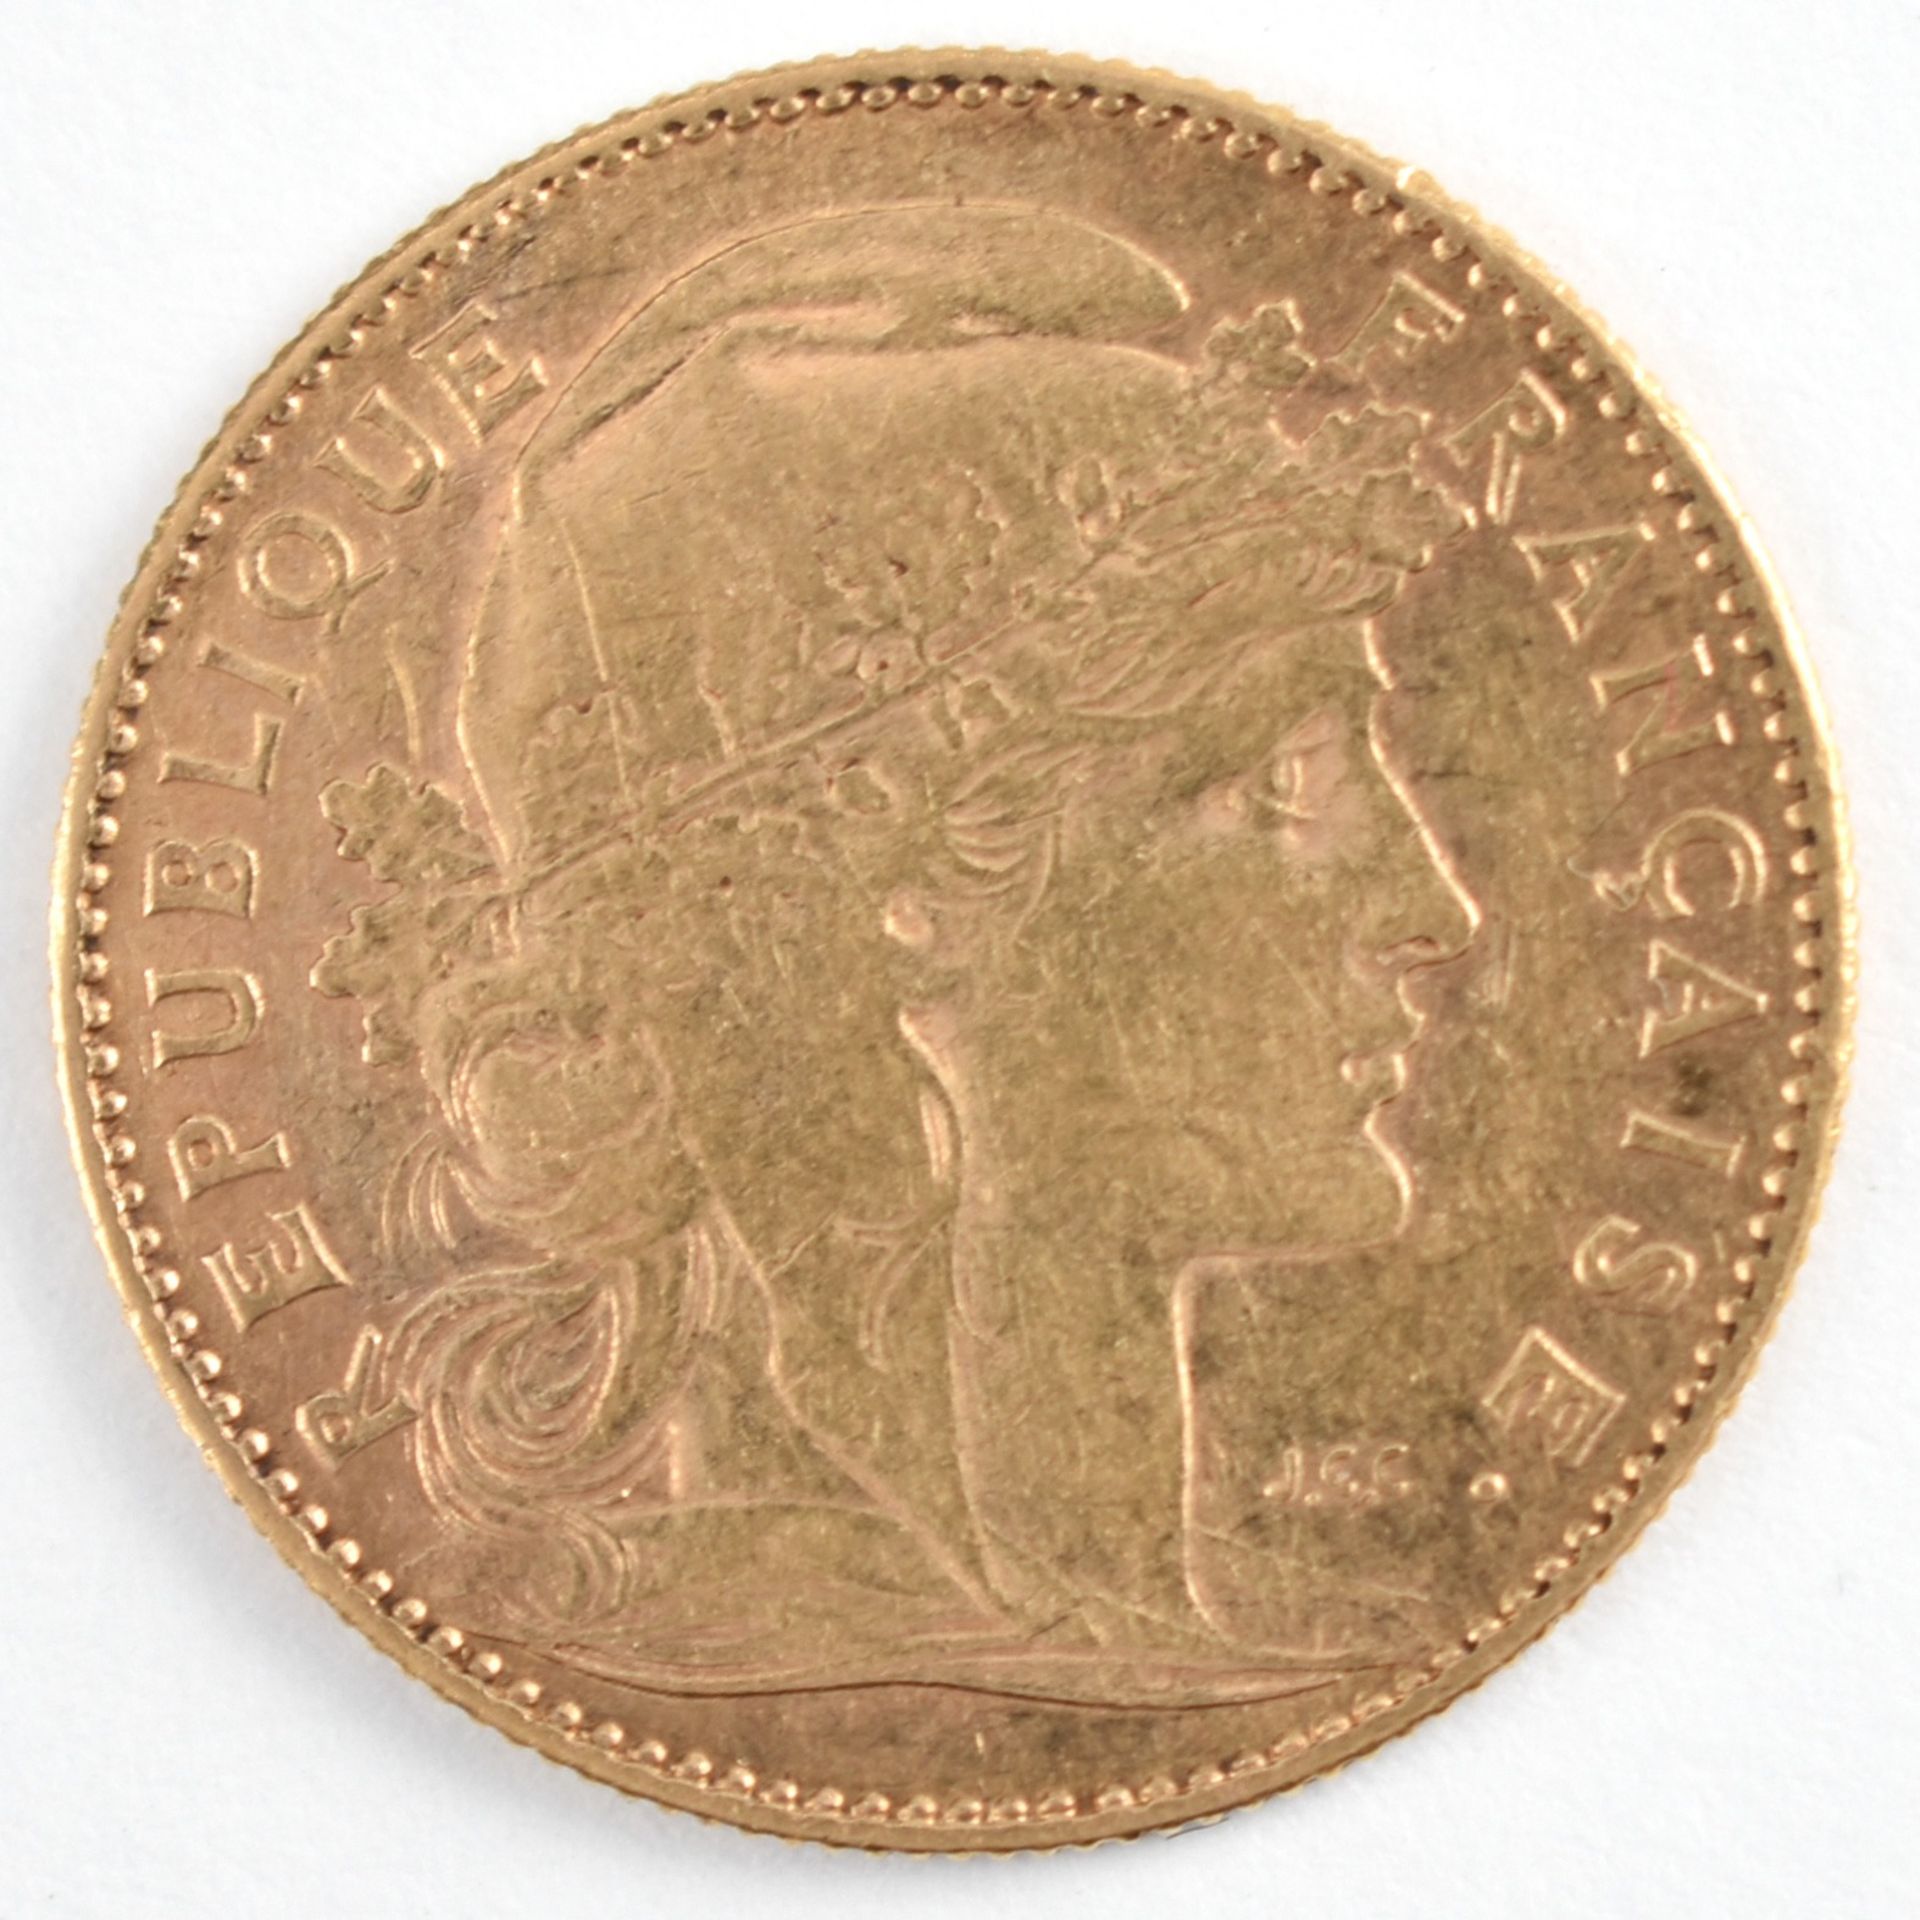 Goldmünze Frankreich 1901 10 Francs in Gold, 900/1000, 3,23 g, D ca. 18,9 mm, av. Marianne Kopf - Bild 2 aus 3